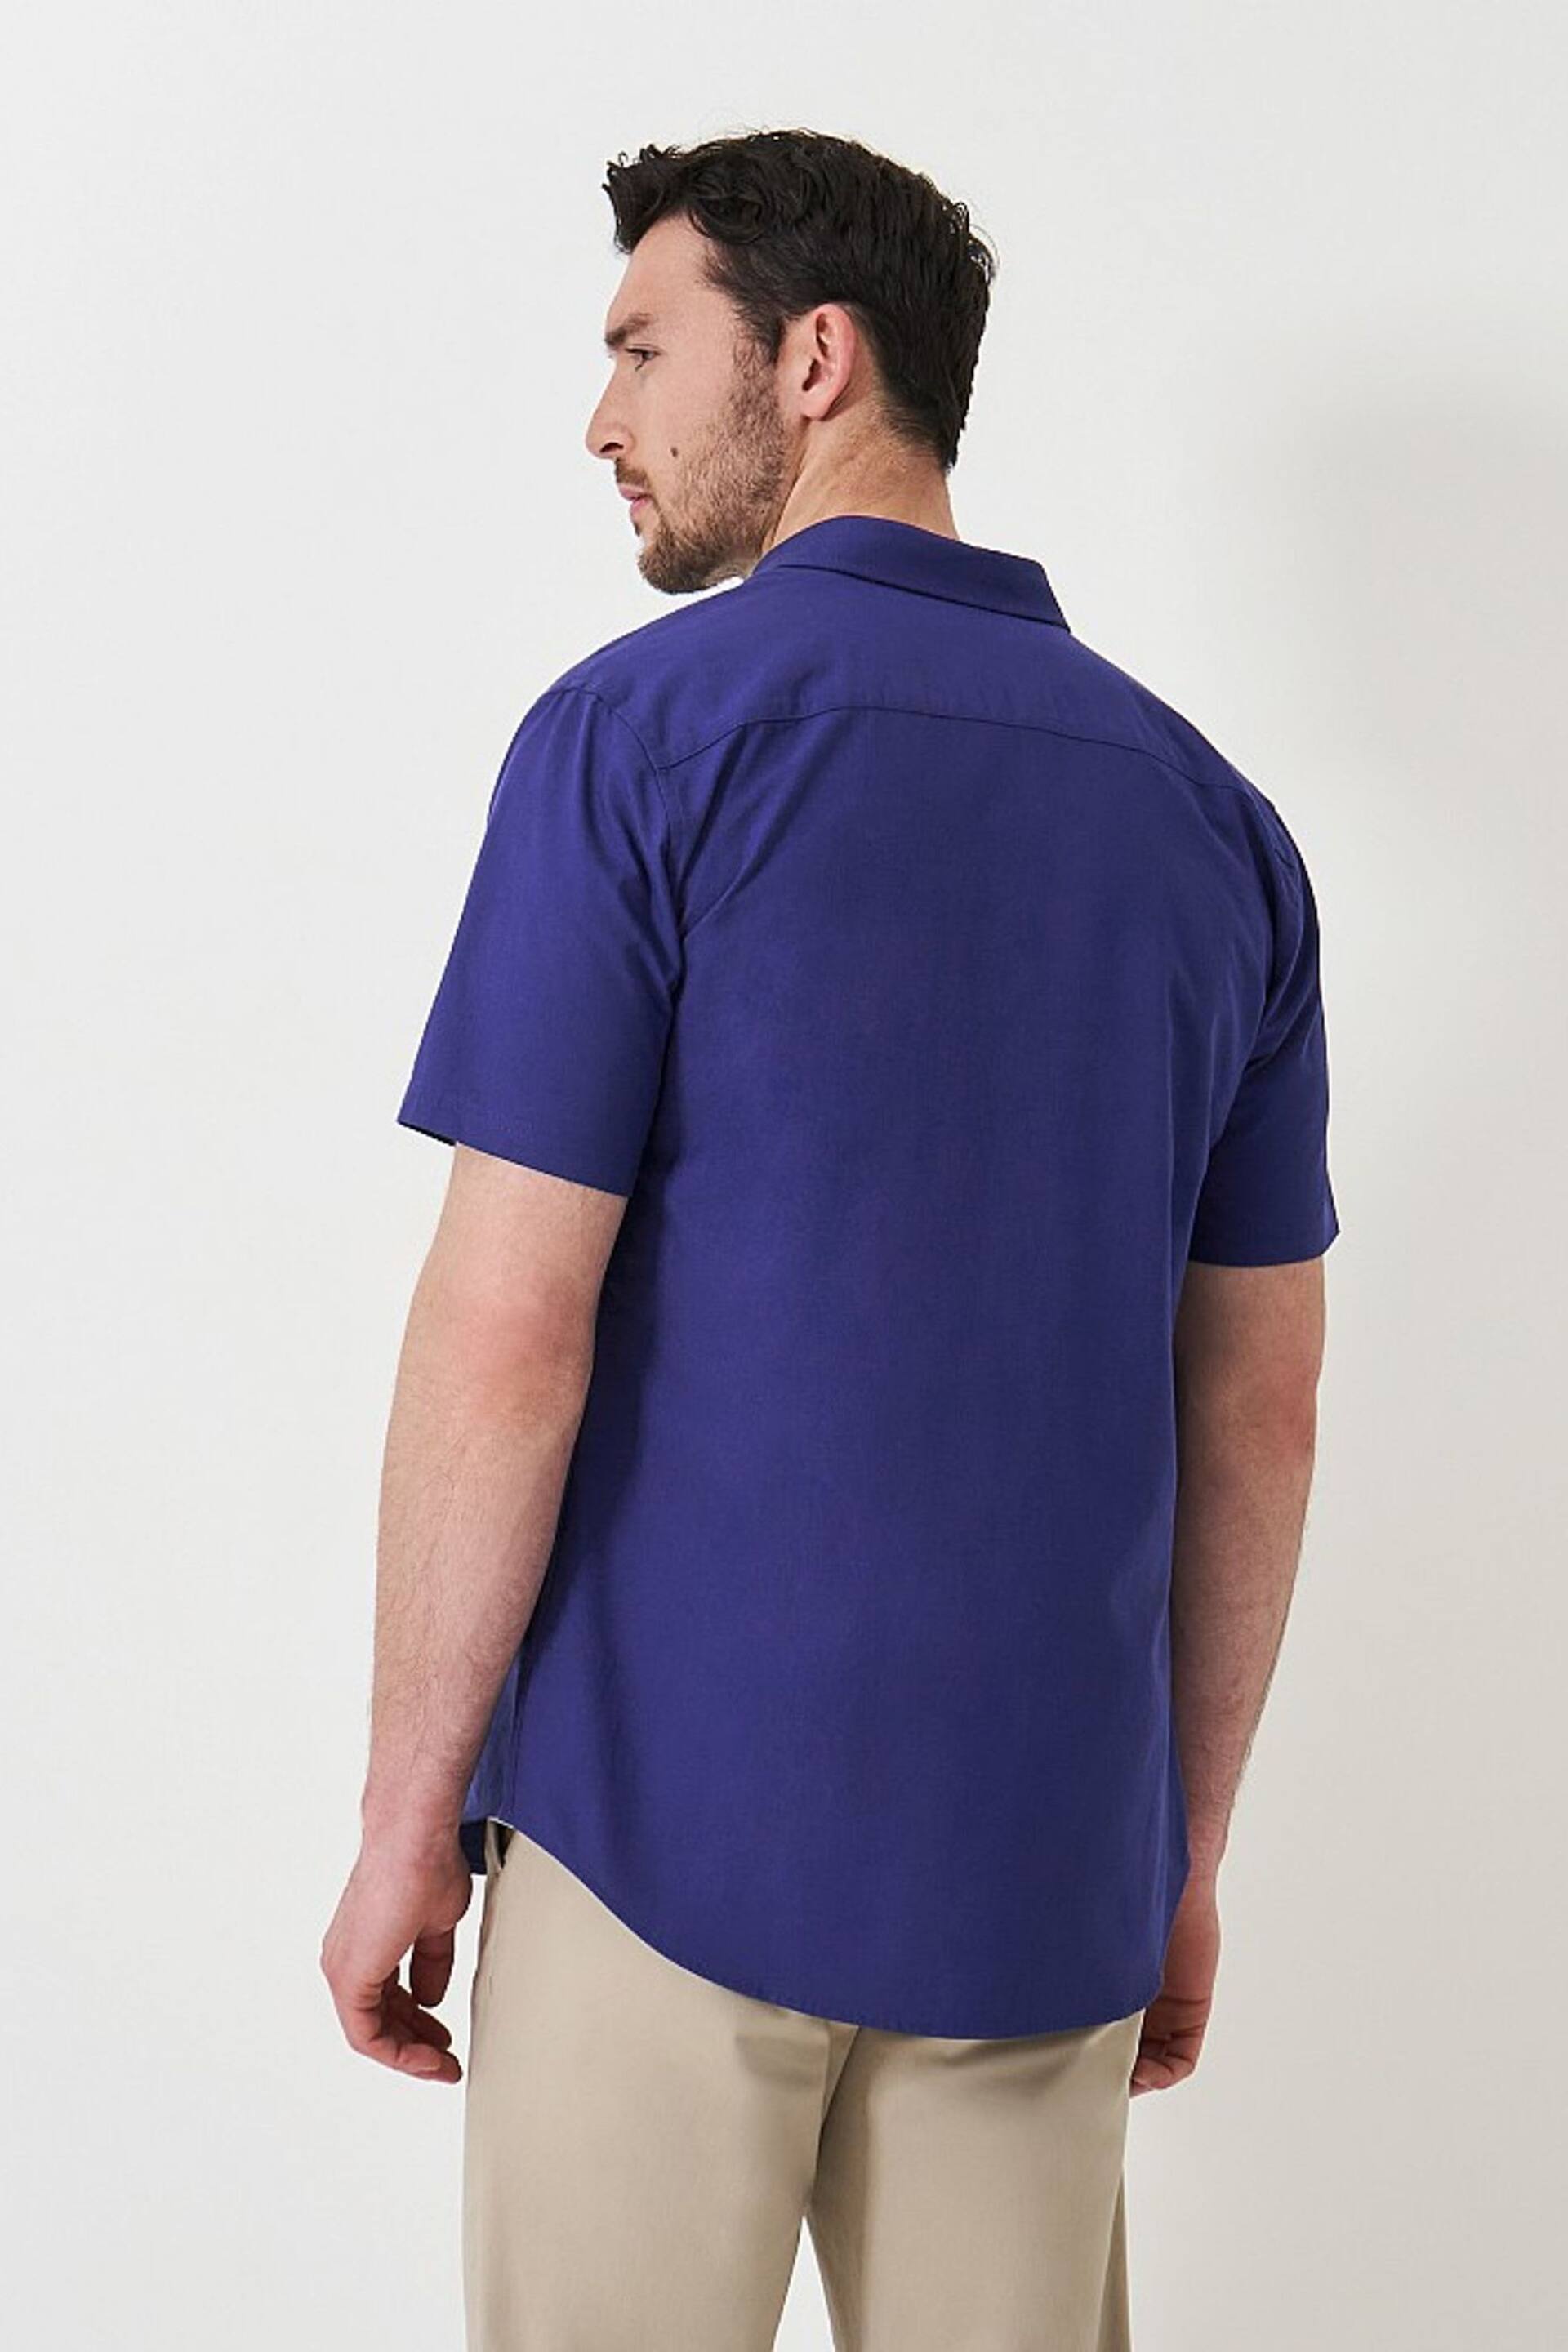 Crew Clothing Company Dark Blue Plain Cotton Classic Shirt - Image 2 of 4